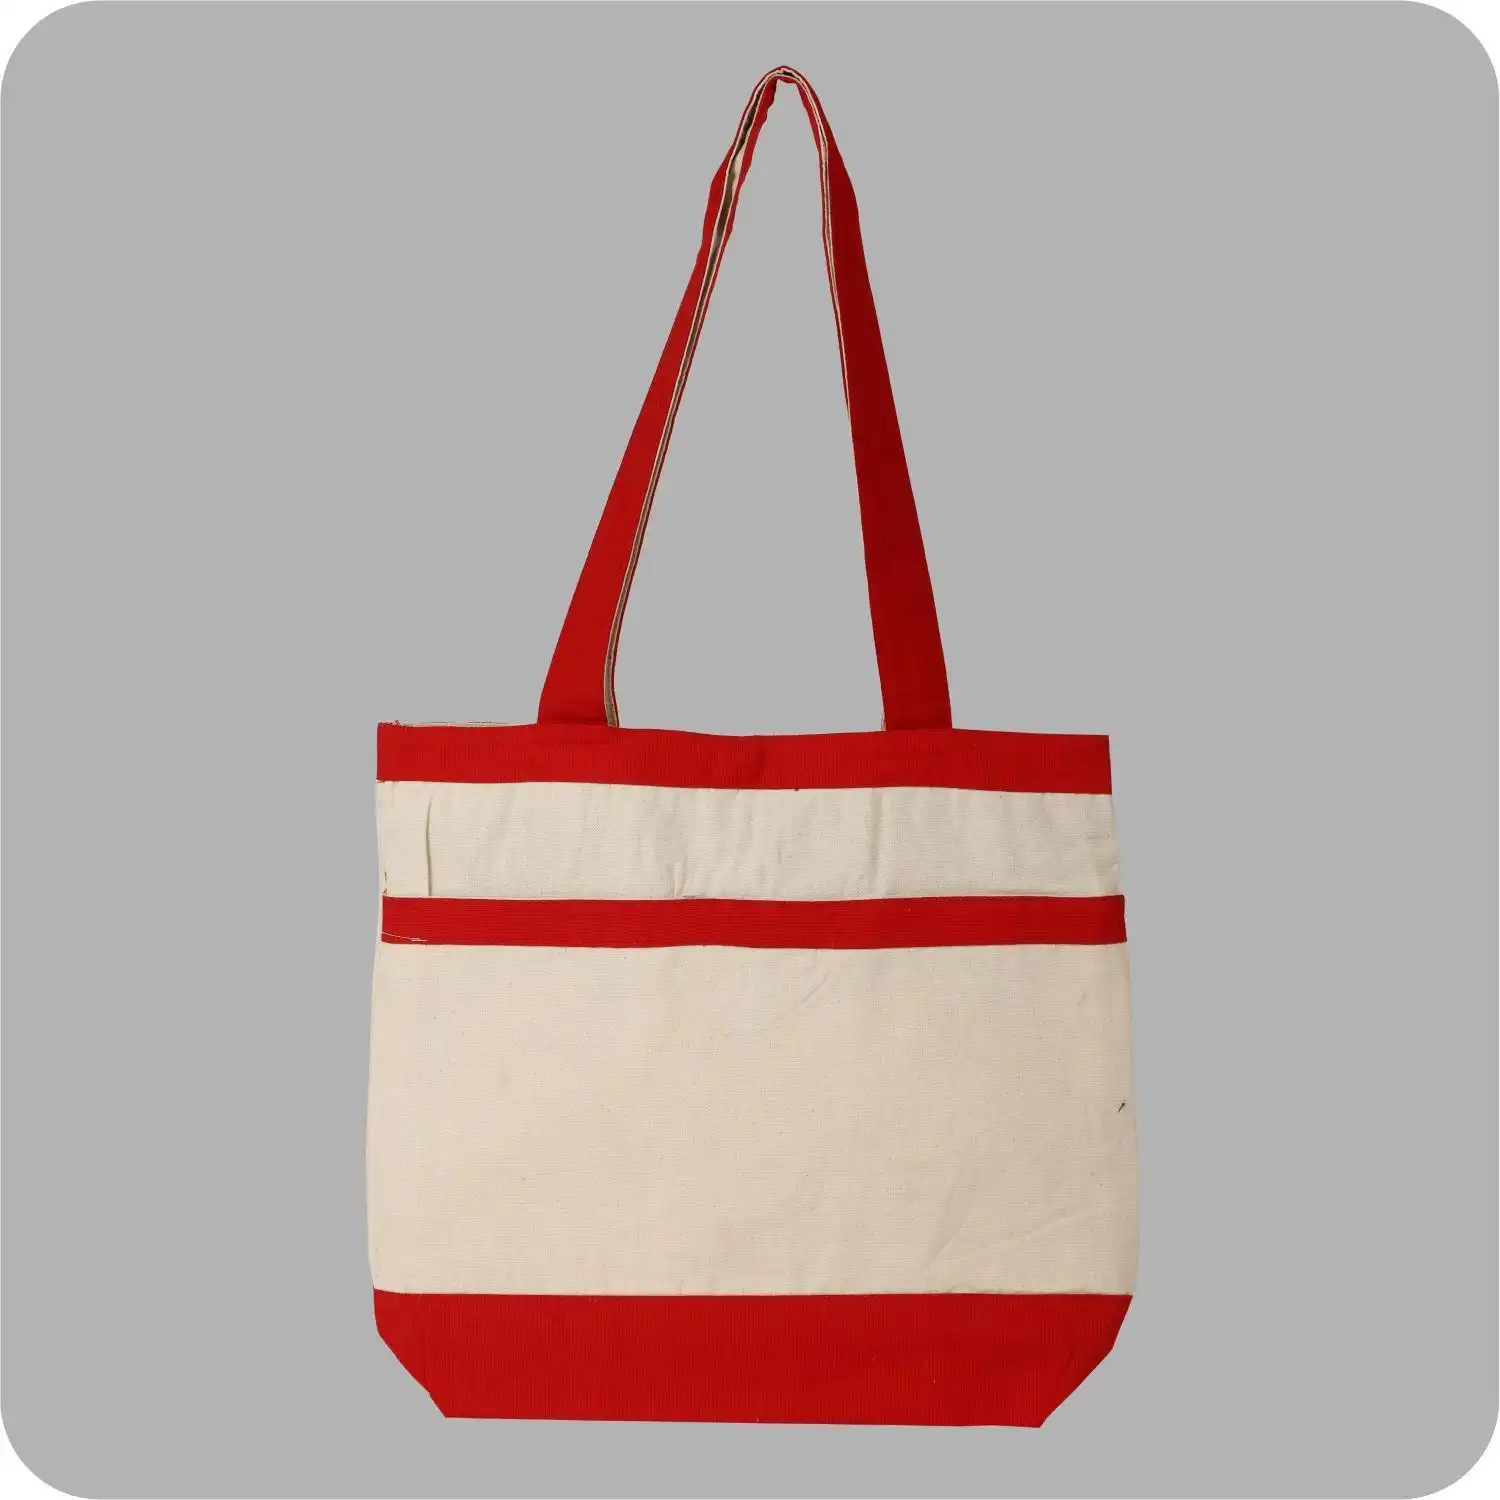 15”x14” Rectangular Shape Uniquely Designed Canvas Bags